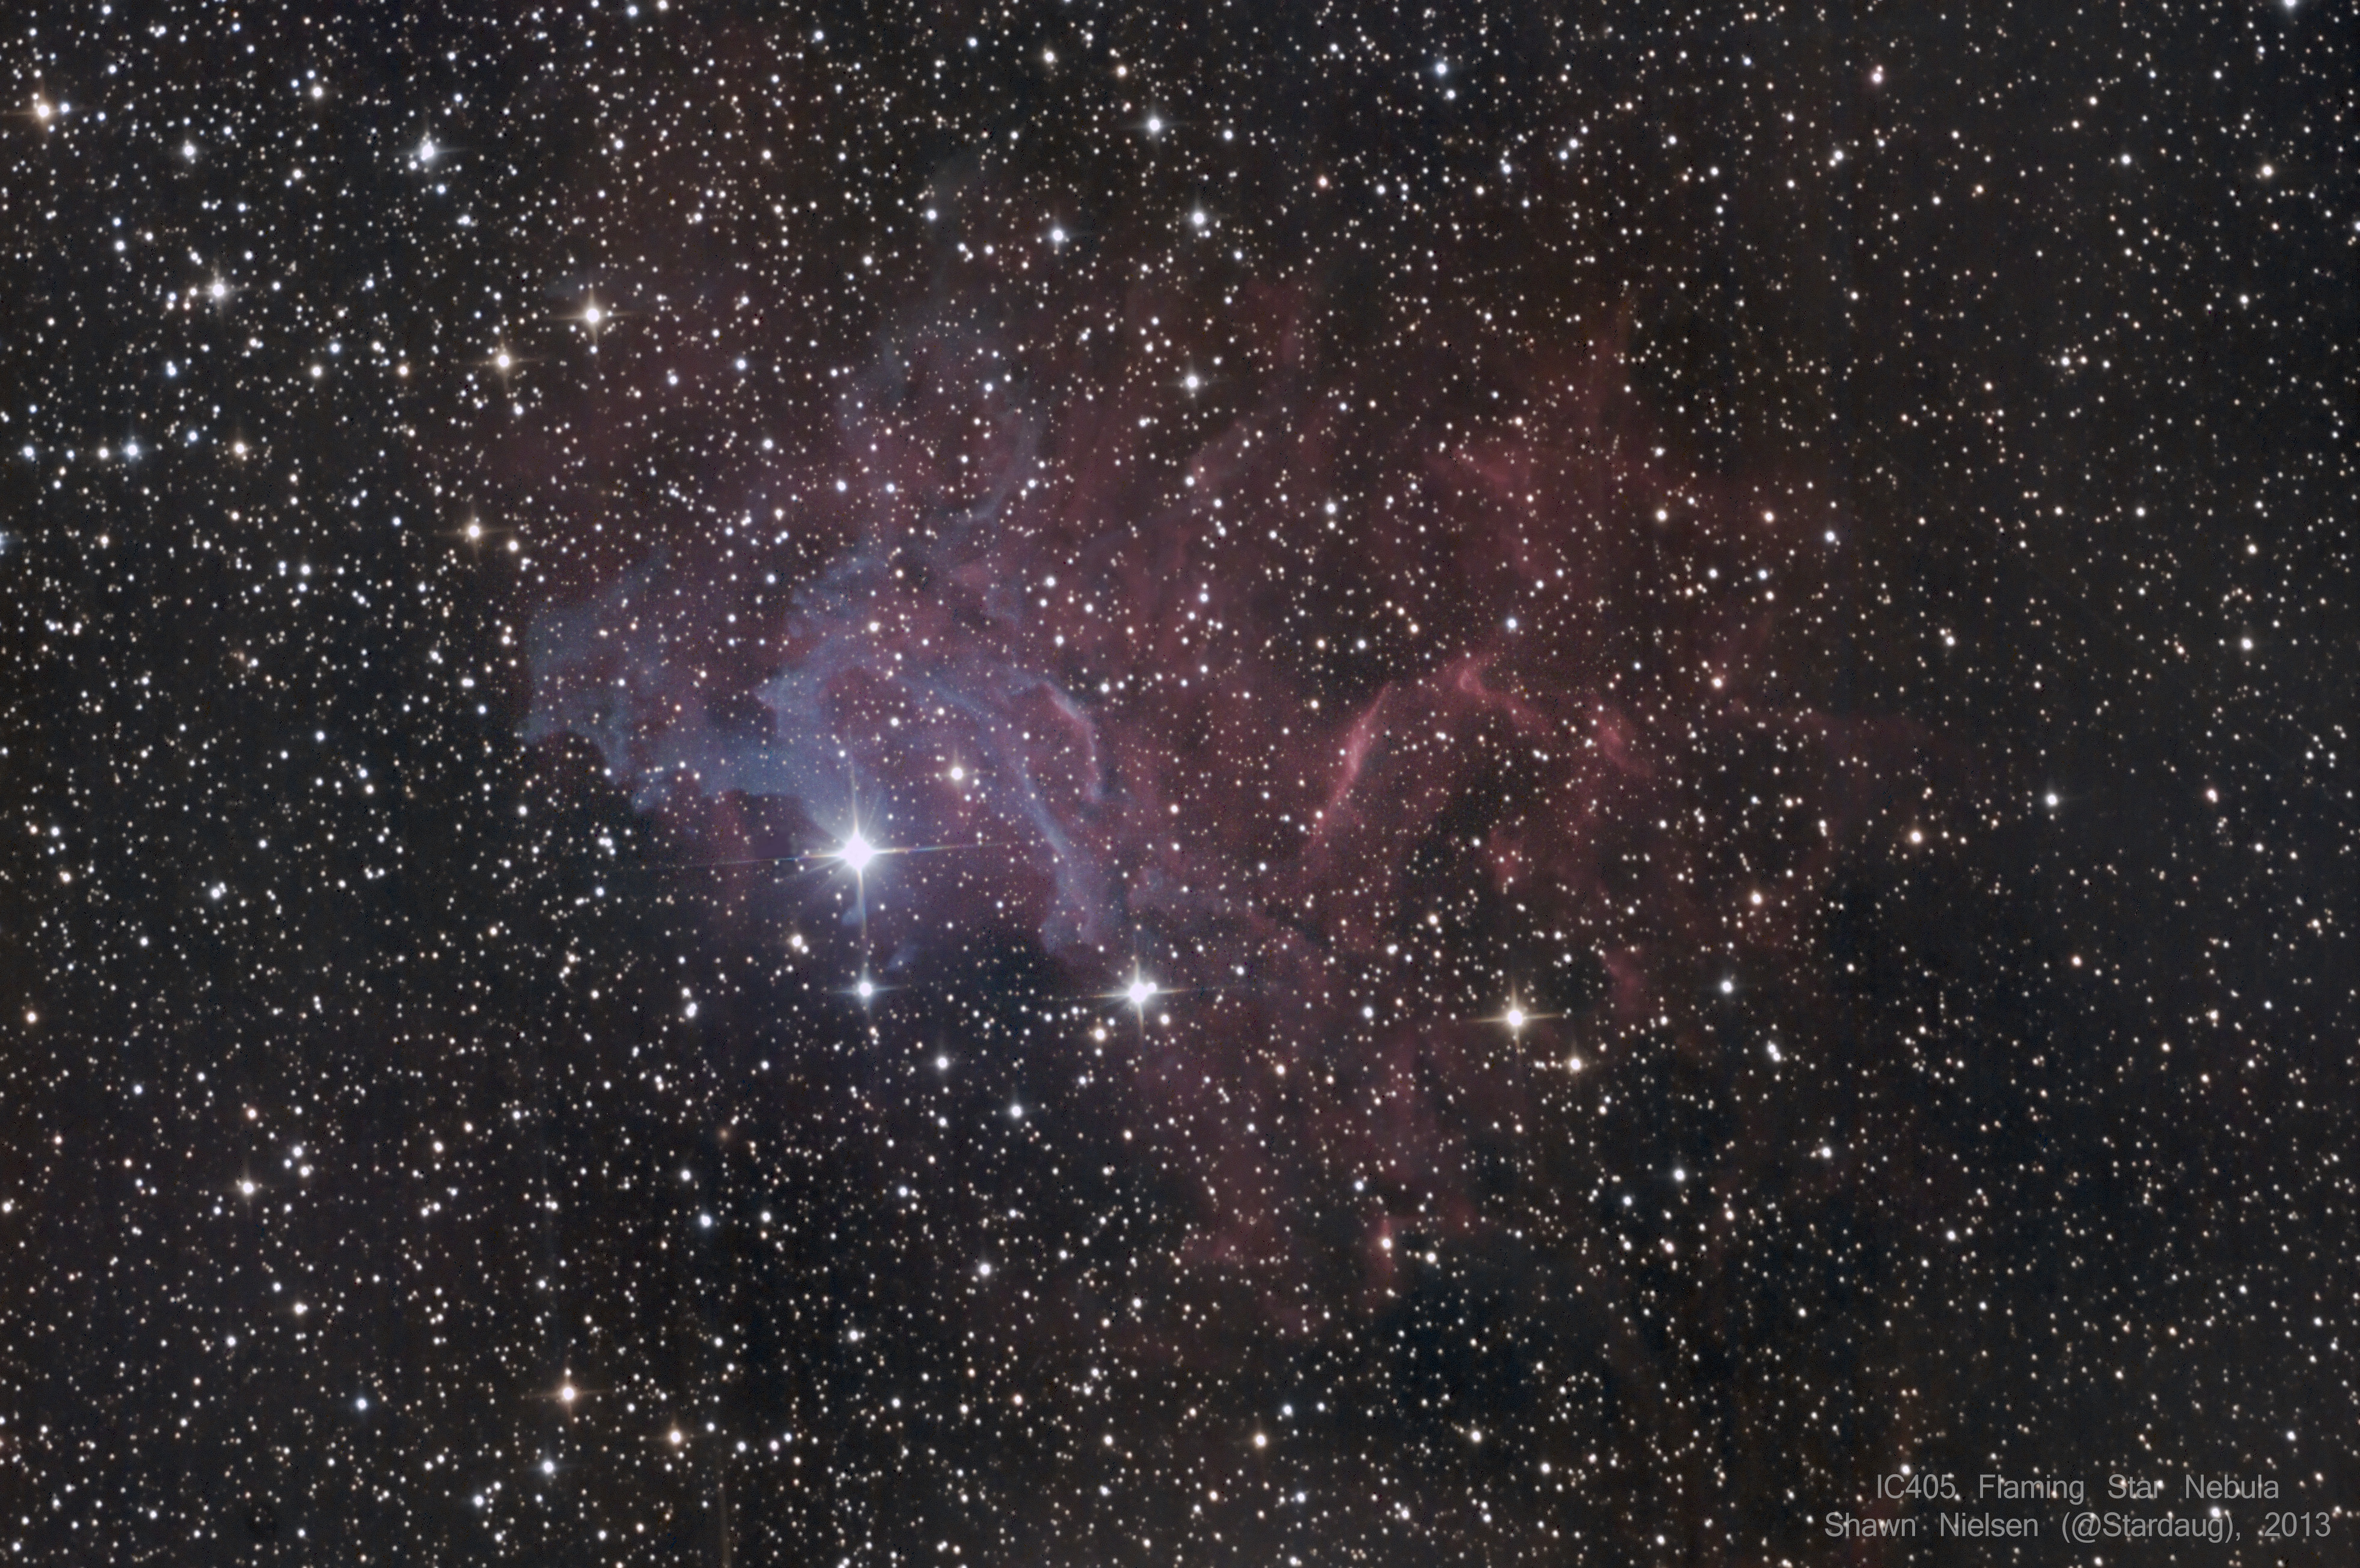 IC405 Flaming Star Nebula in HOO - Experienced Deep Sky 